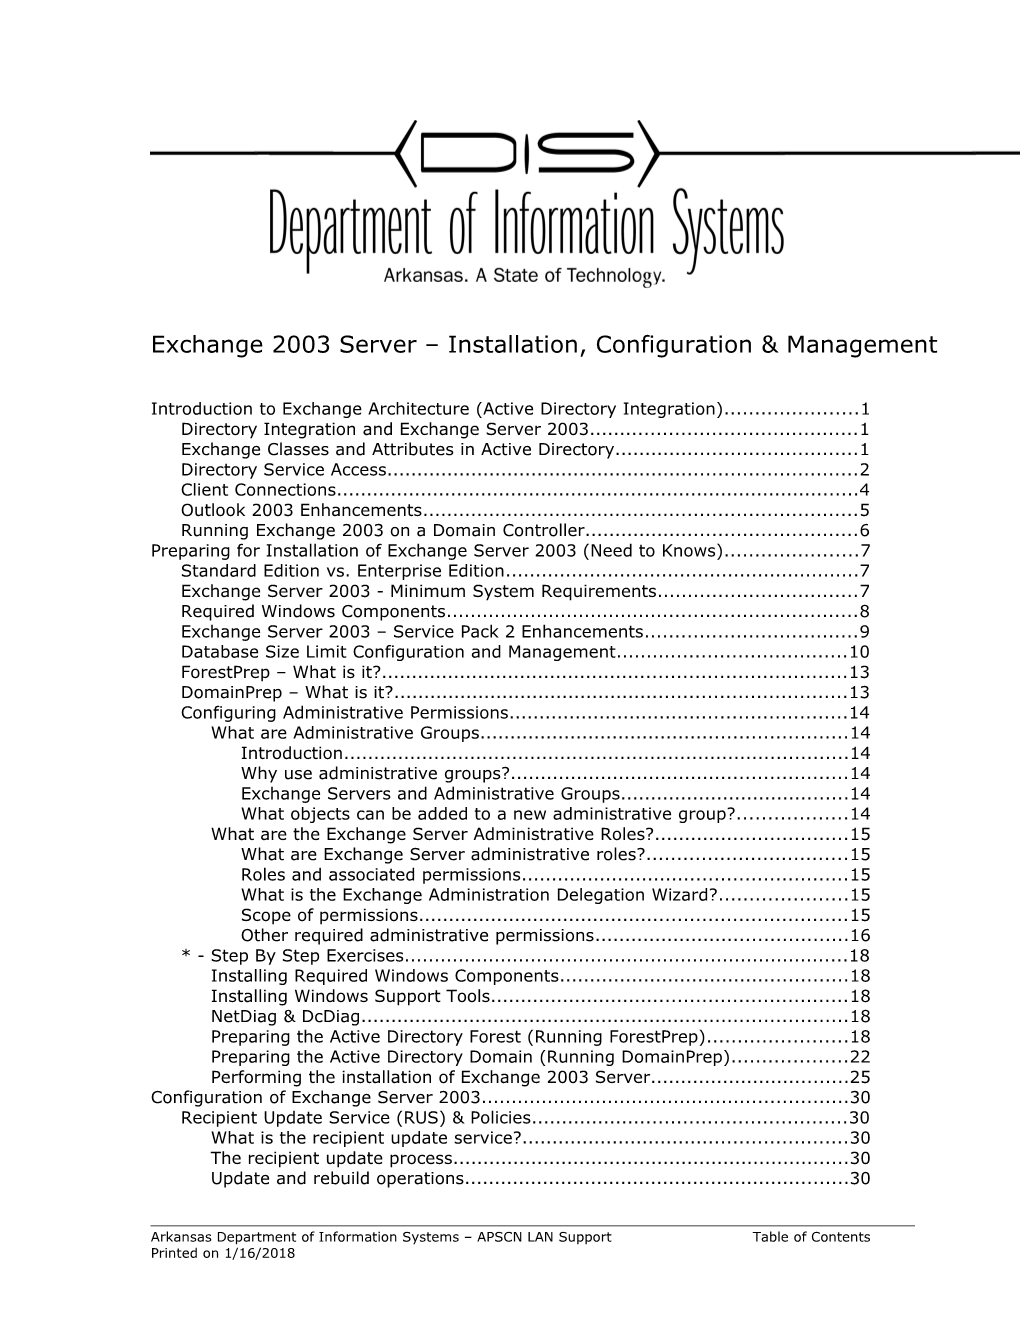 Exchange 2003 Server Installation, Configuration & Management